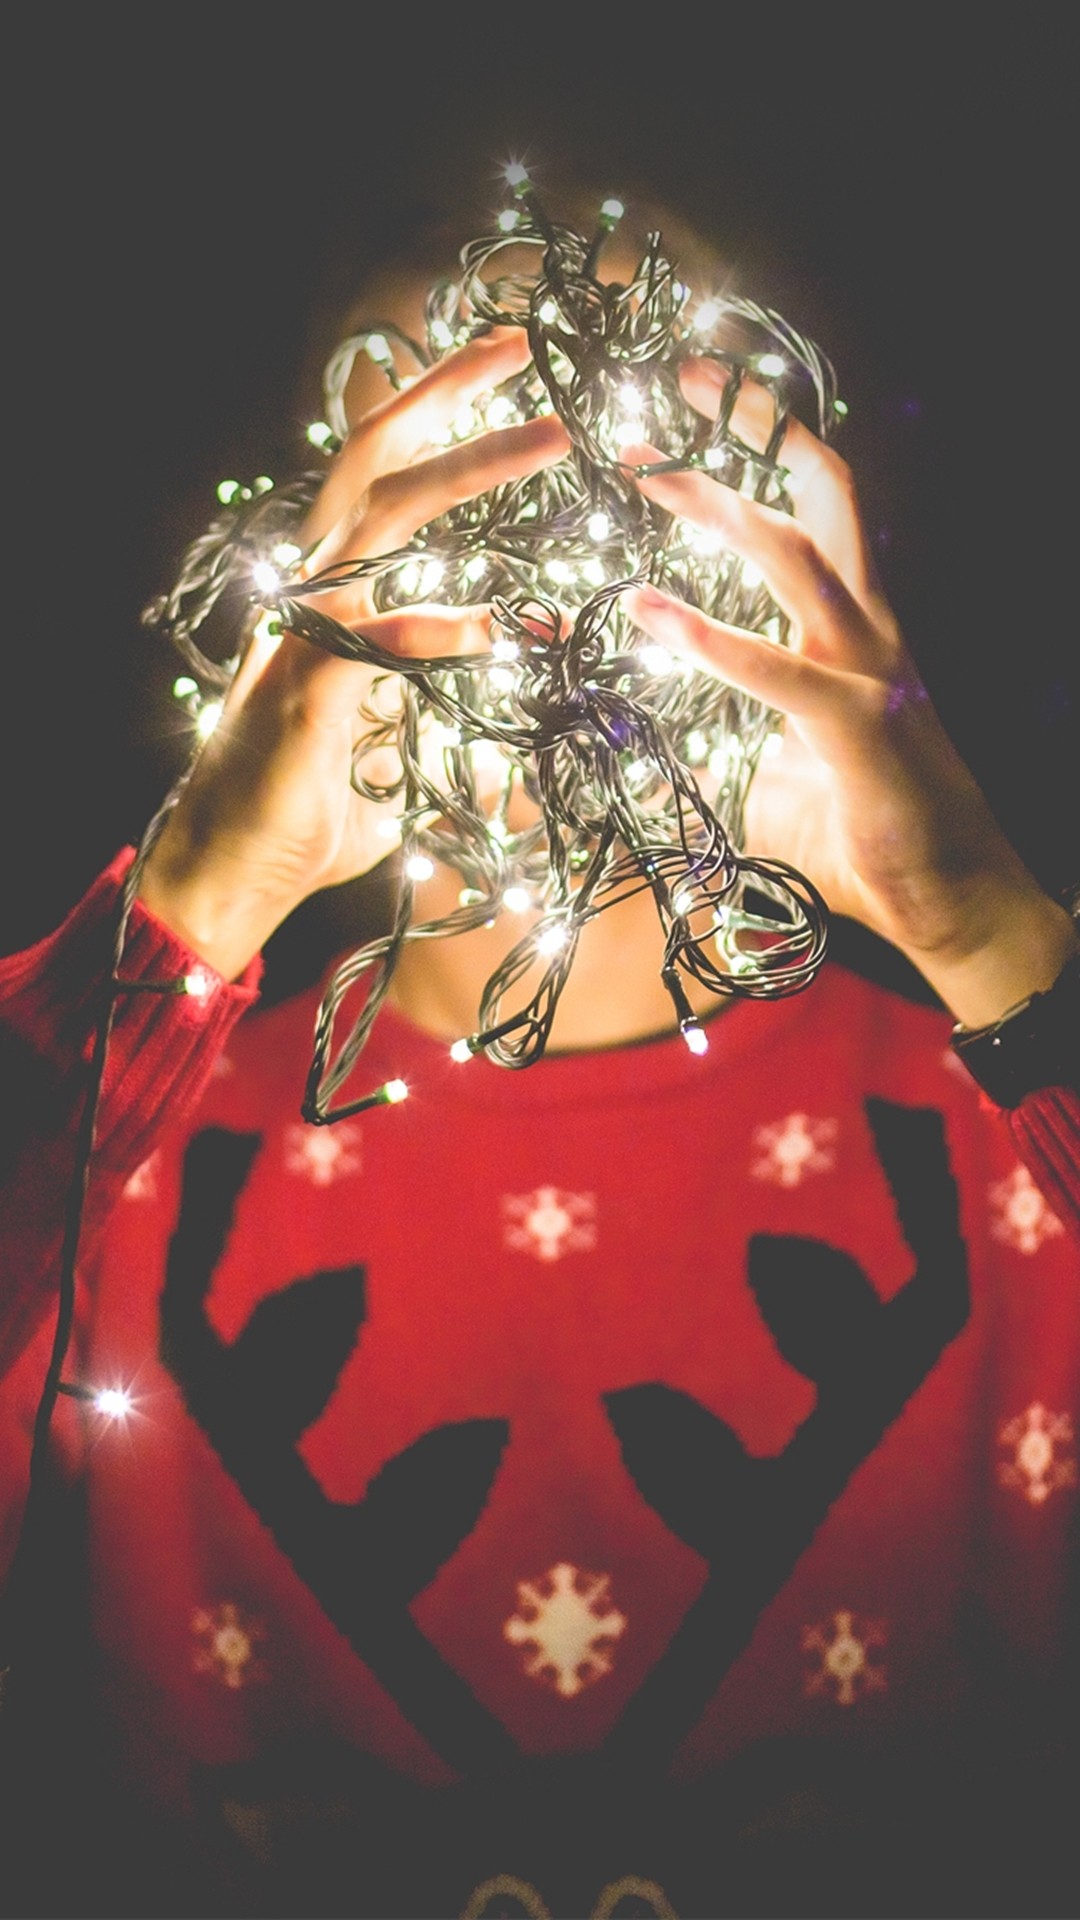 1080x1920 Christmas Lights Rentier Pullover iPhone 8 Plus Wallpaper